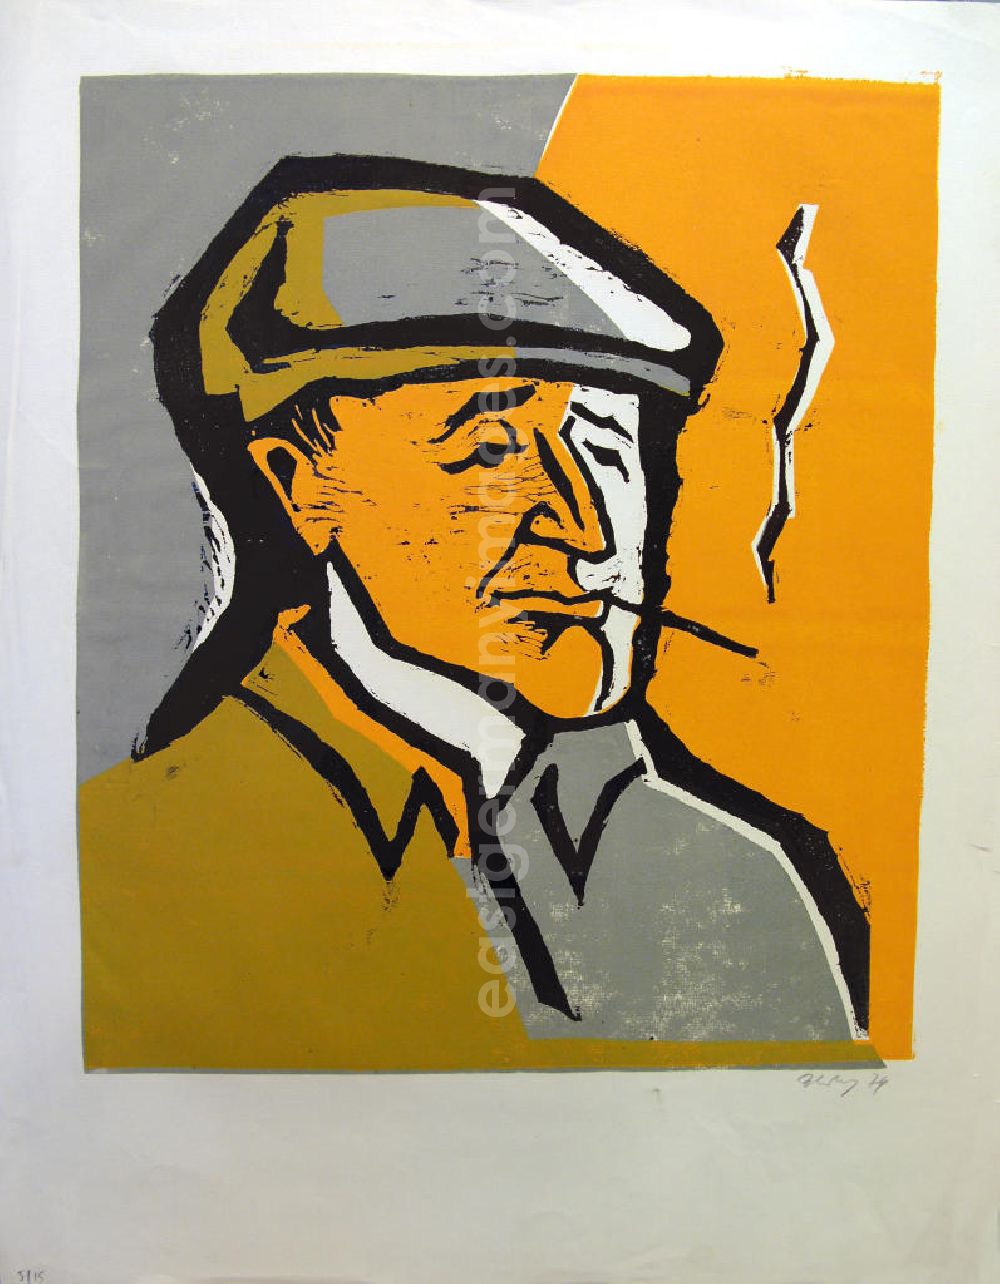 GDR image archive: Berlin - Grafik von Herbert Sandberg über Bertolt Brecht (*10.02.1898 †14.08.1956) b.b. (Brecht Porträt links, raucht) aus dem Jahr 1974, 36,8x42,